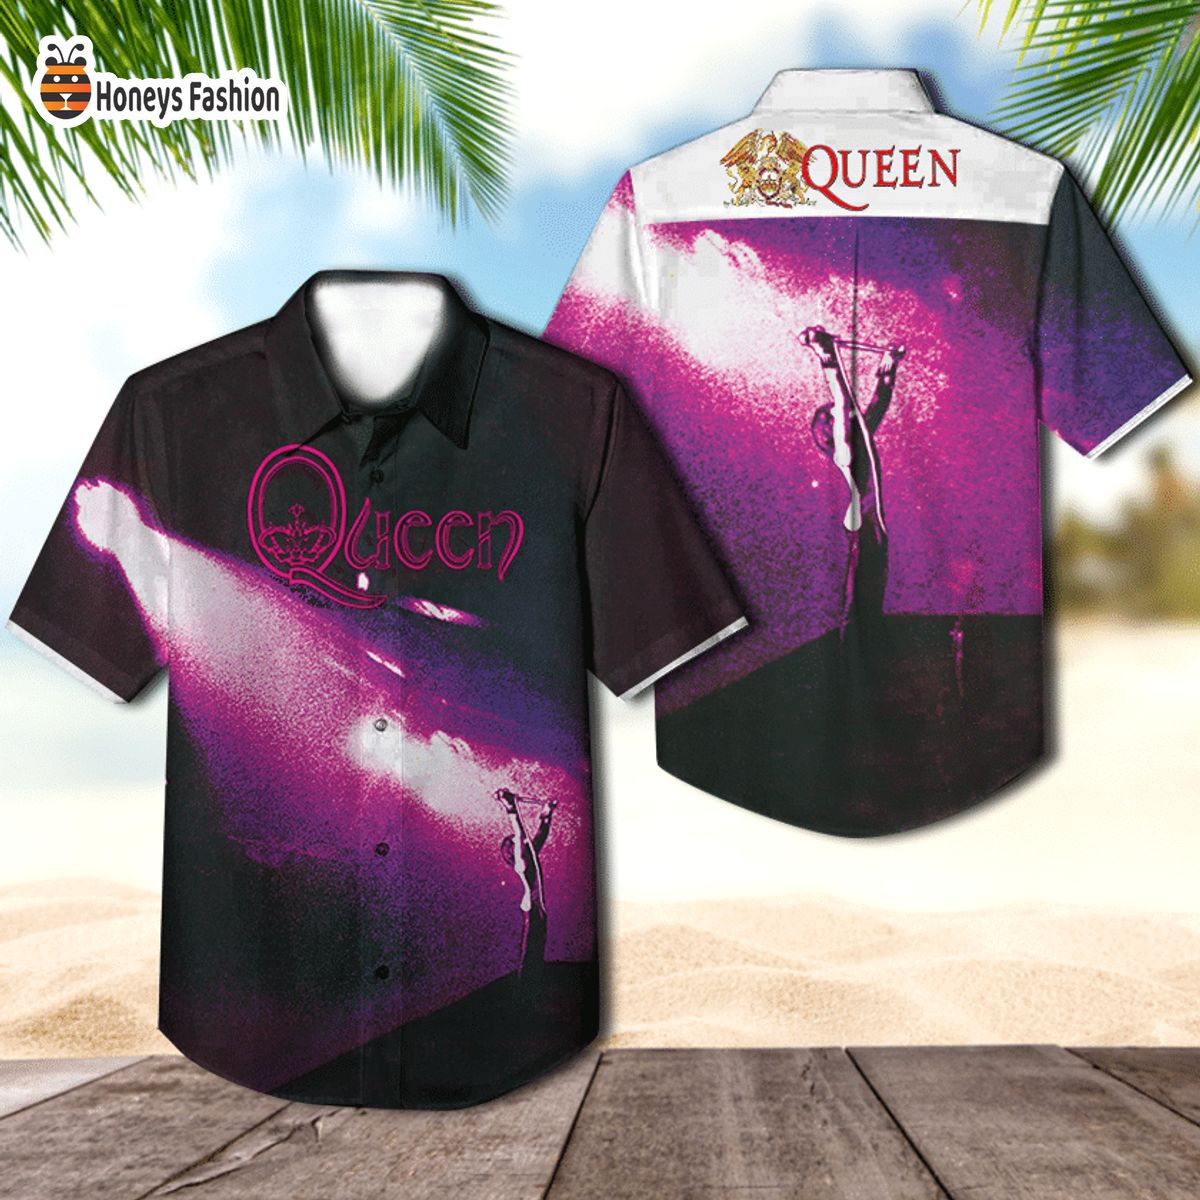 Queen band queen album cover hawaiian shirt